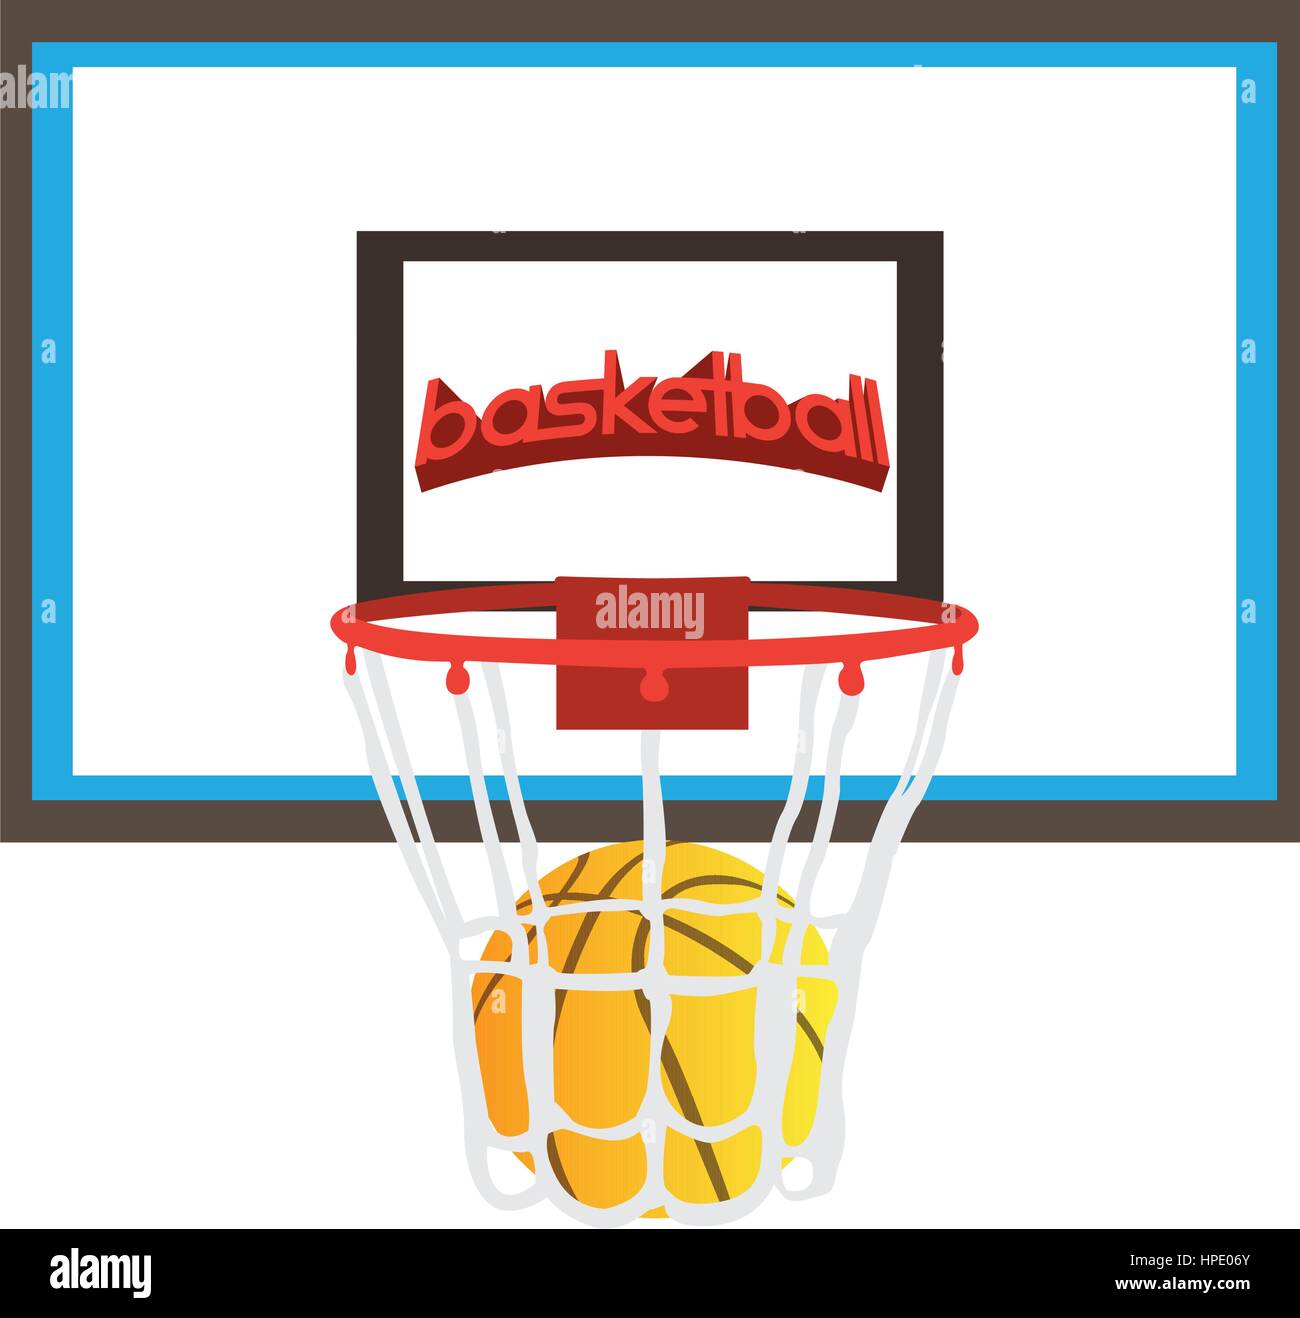 Isolated basketball emblem Stock Vector